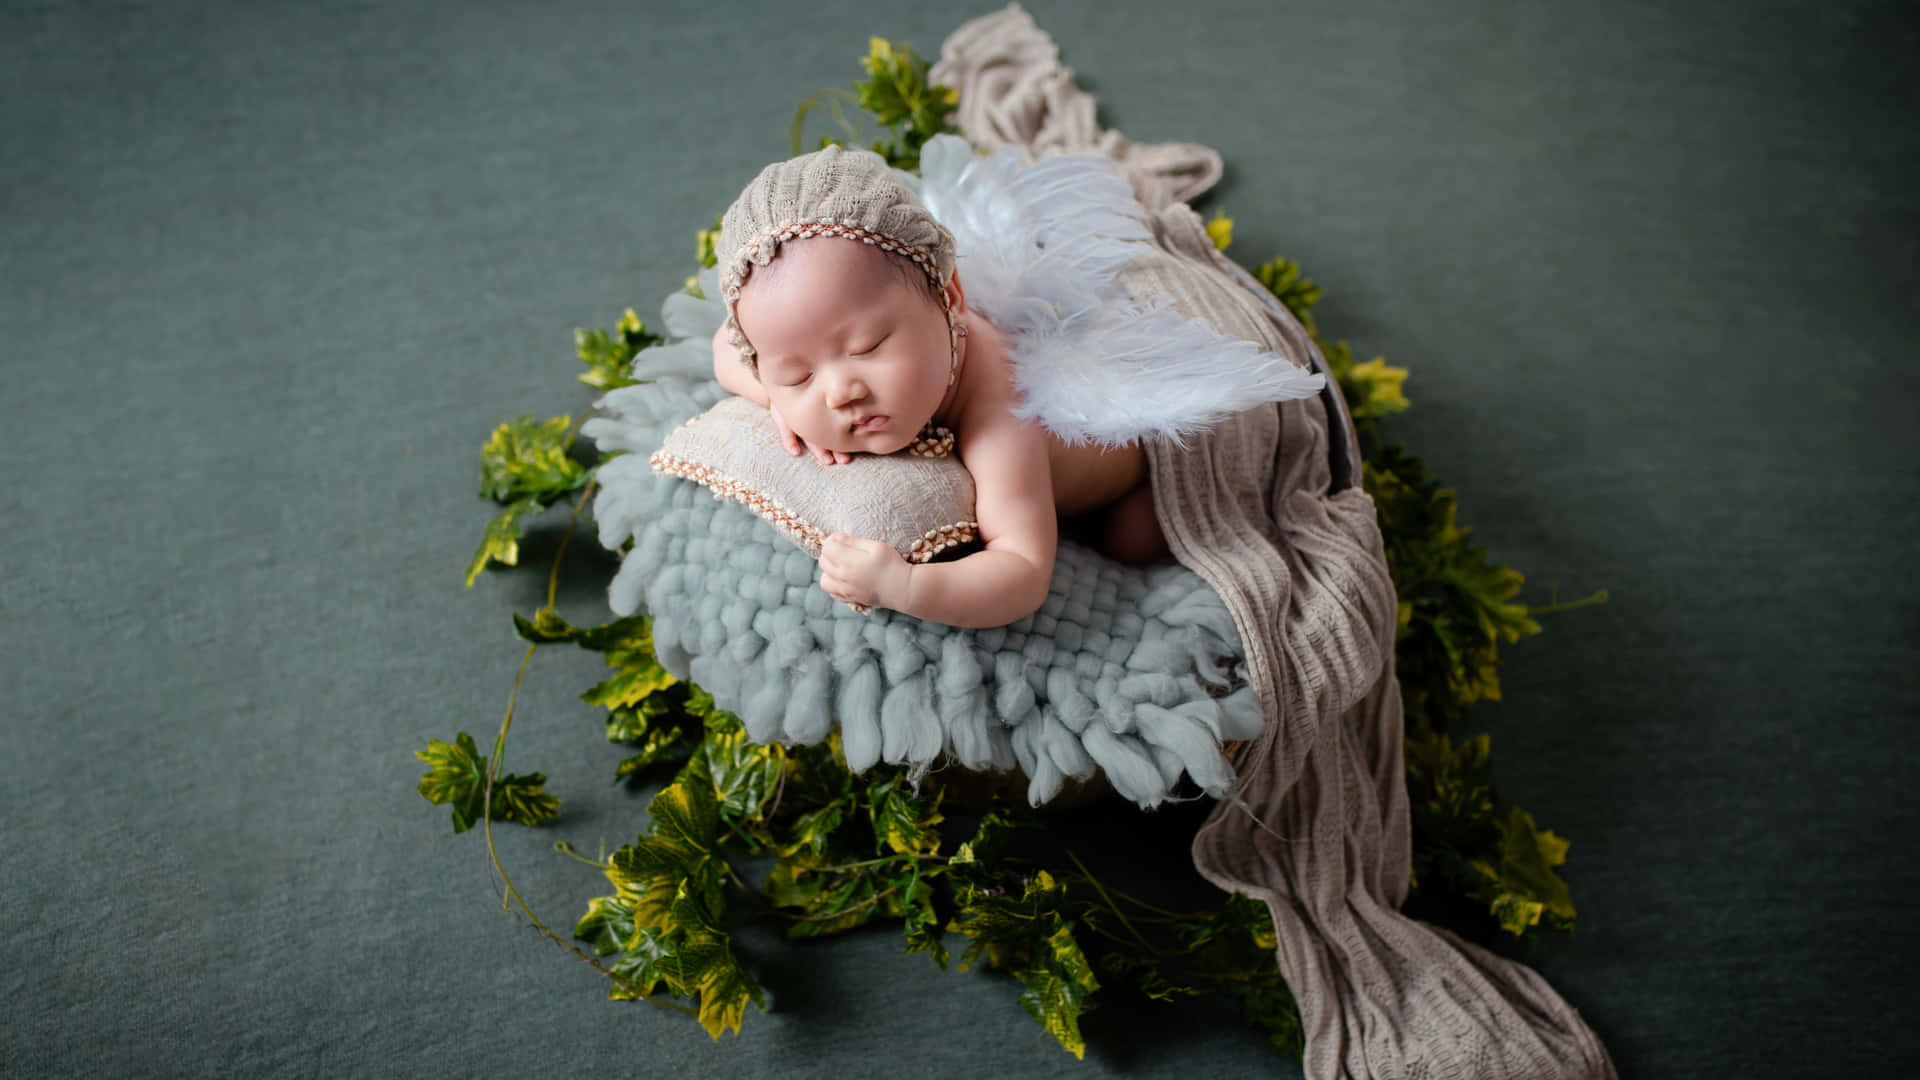 Sleeping Newborn Baby During A Photo Shoot Background